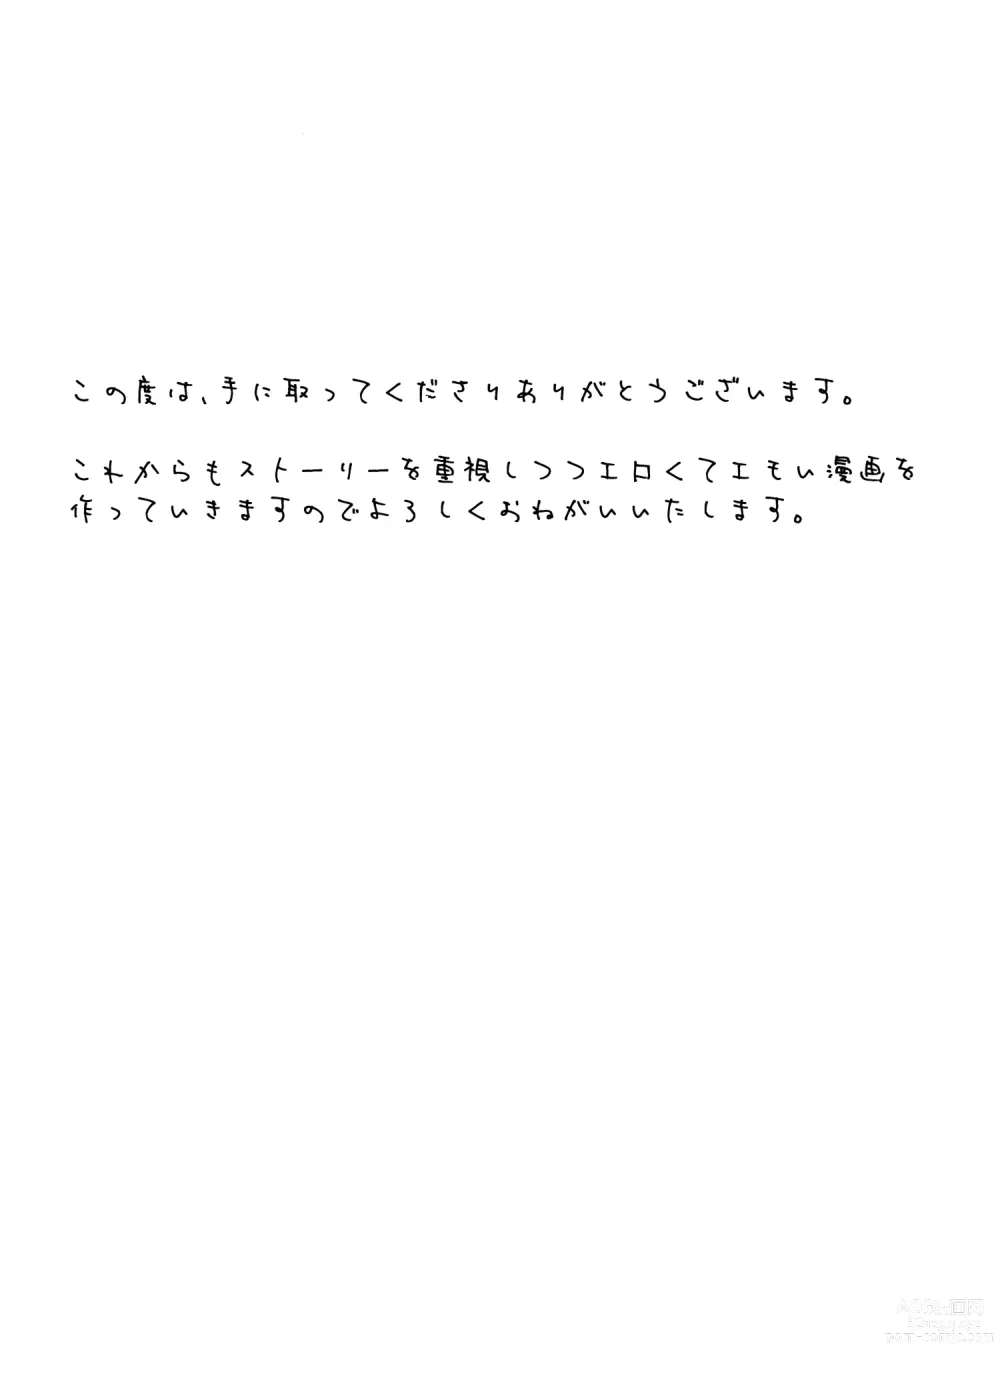 Page 34 of doujinshi M ni Naru